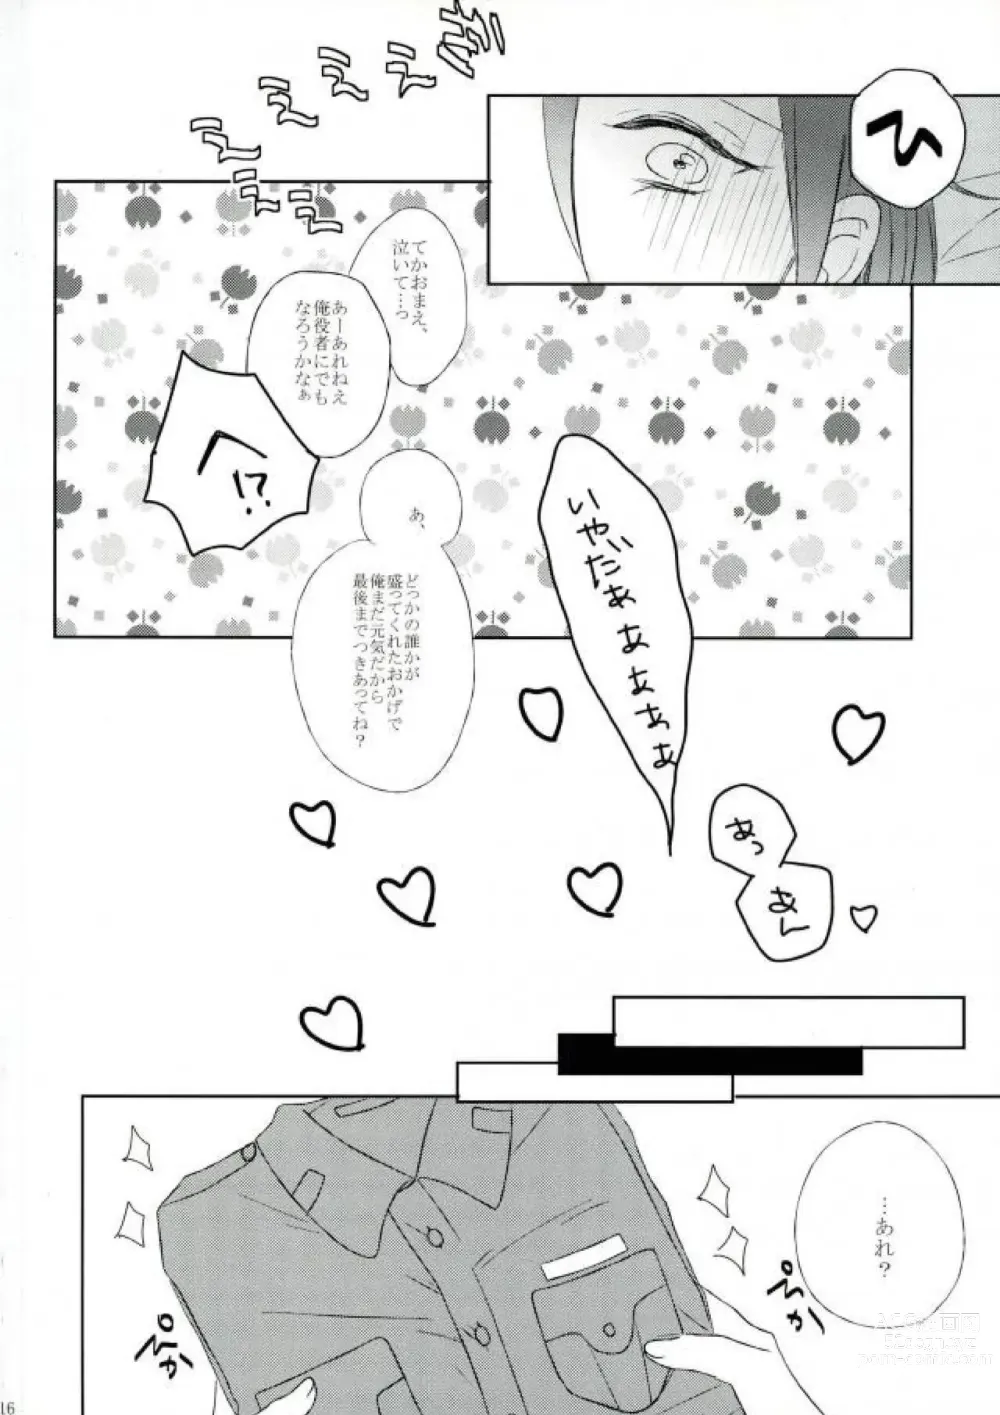 Page 13 of doujinshi RIPSTICK